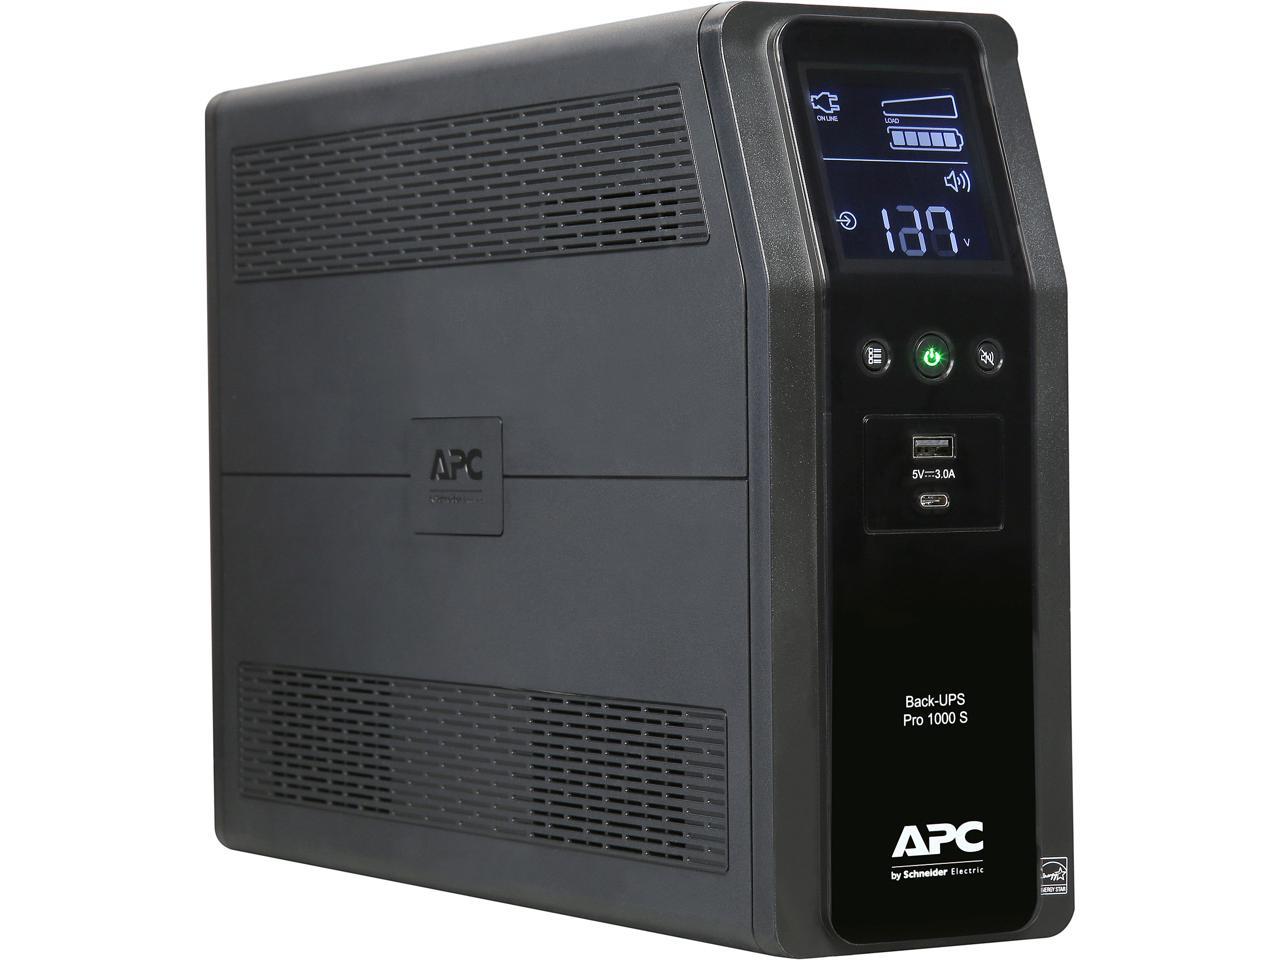 APC BR1000MS 1000 VA Pure SineWave 10 Outlets Back-UPS Pro Battery Backup @Newegg $130